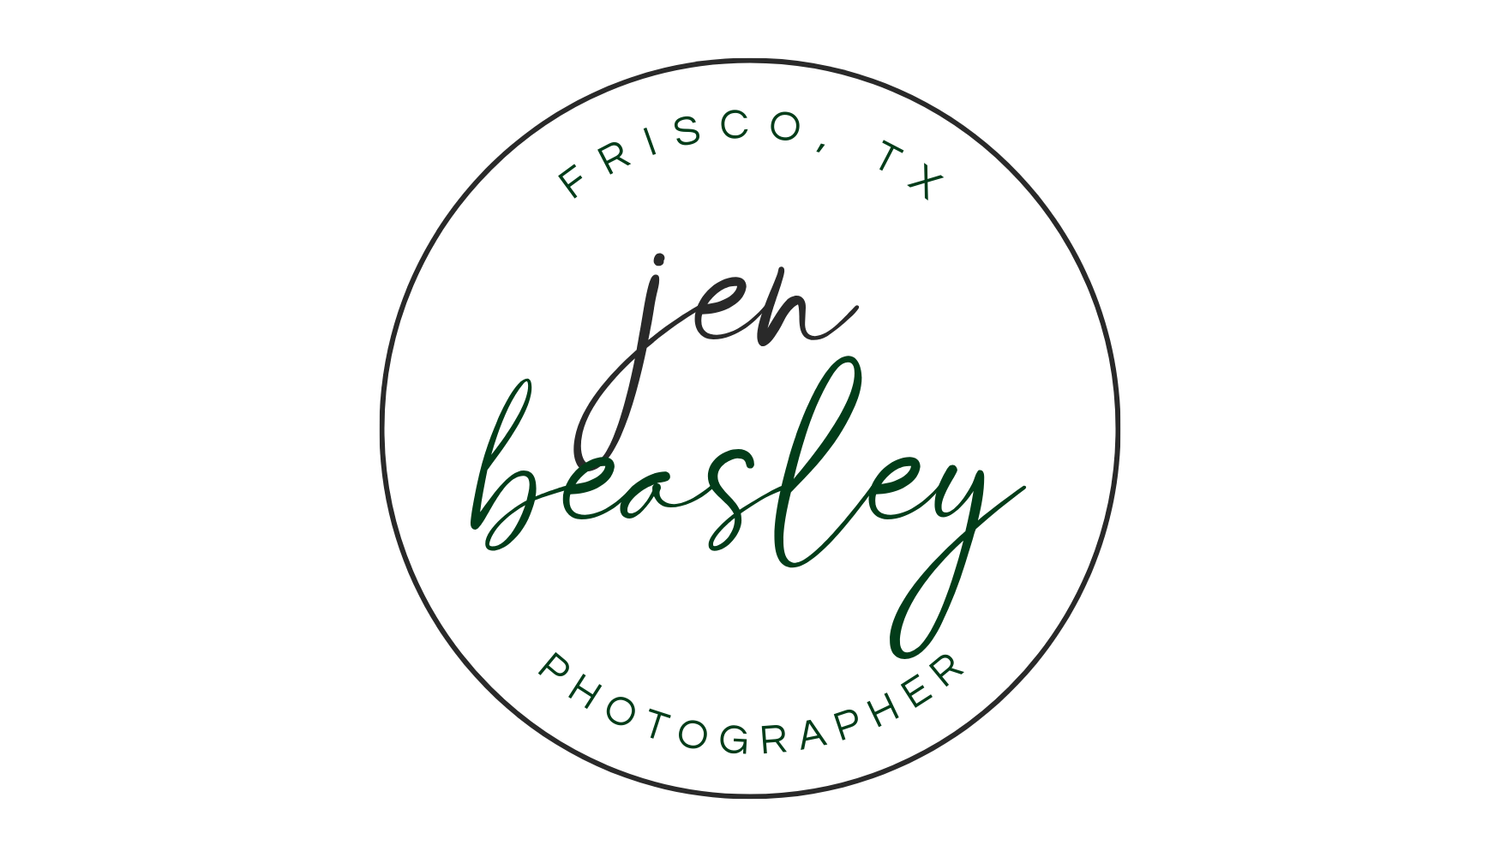 Jen Beasley &mdash; Frisco, TX Photographer